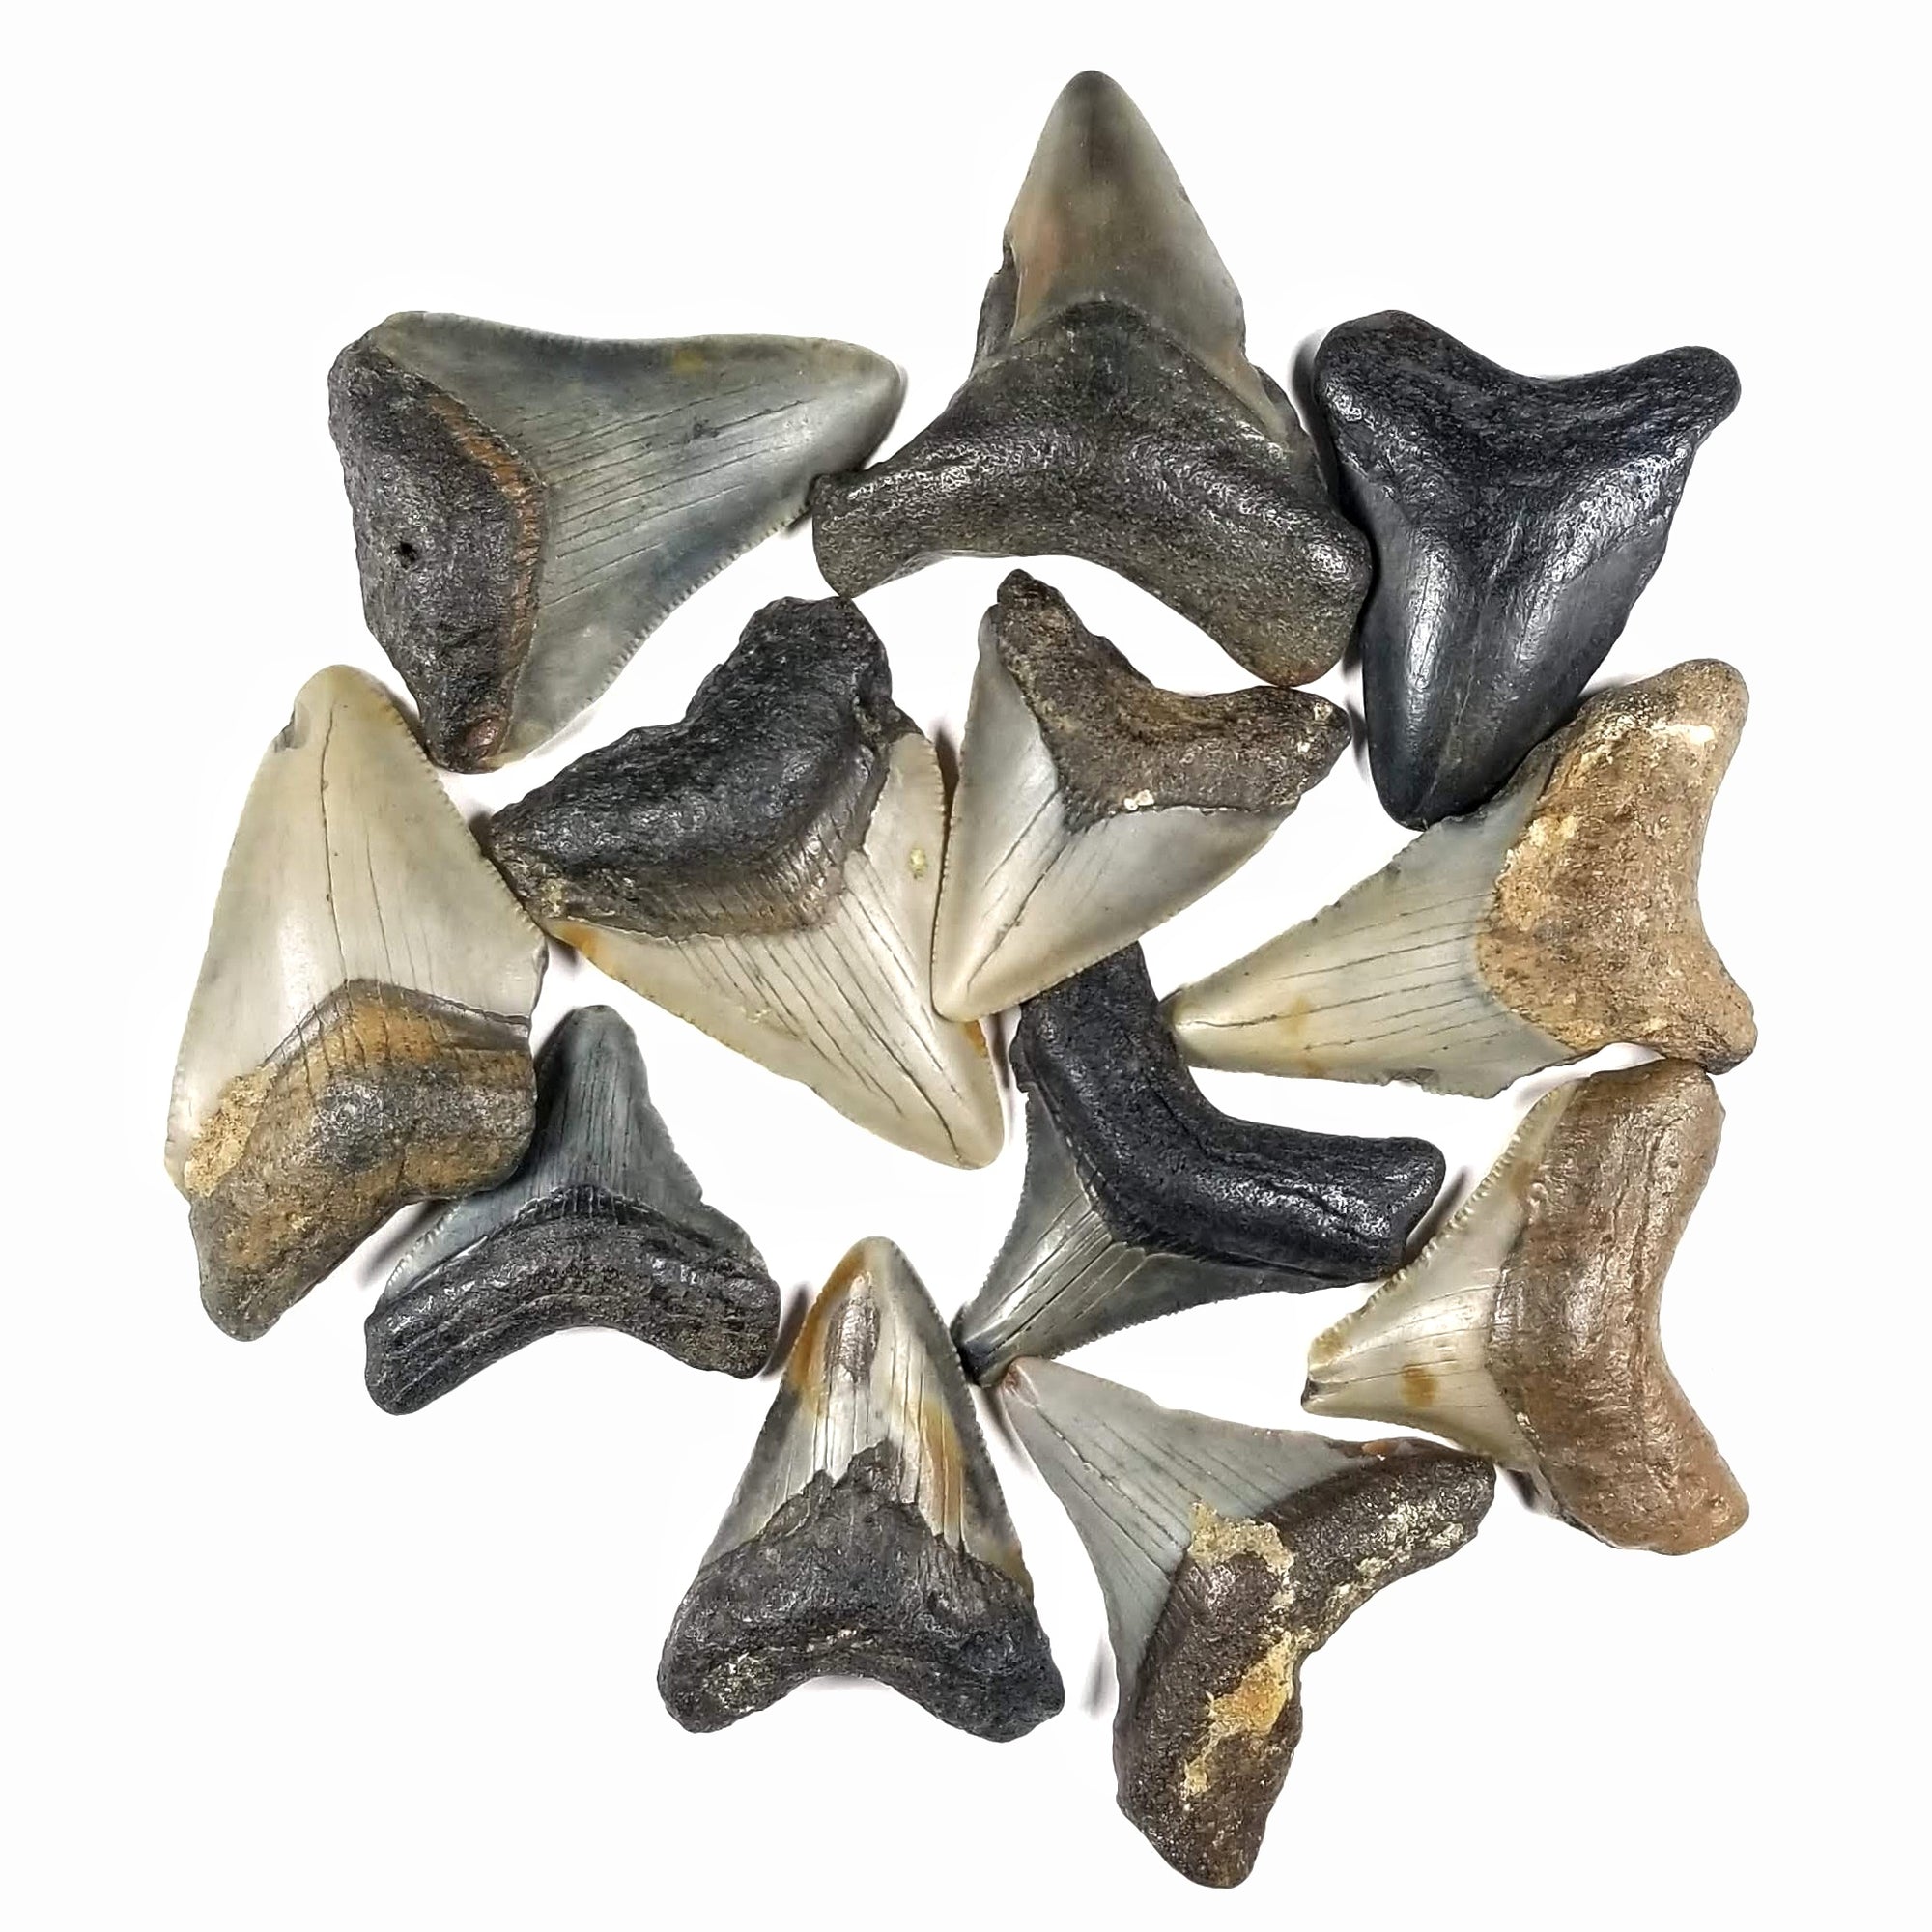 Megalodon Tooth, Small (1 to 2") - Miocene Epoch - 23 to 3.6 MYA - South Carolina, USA